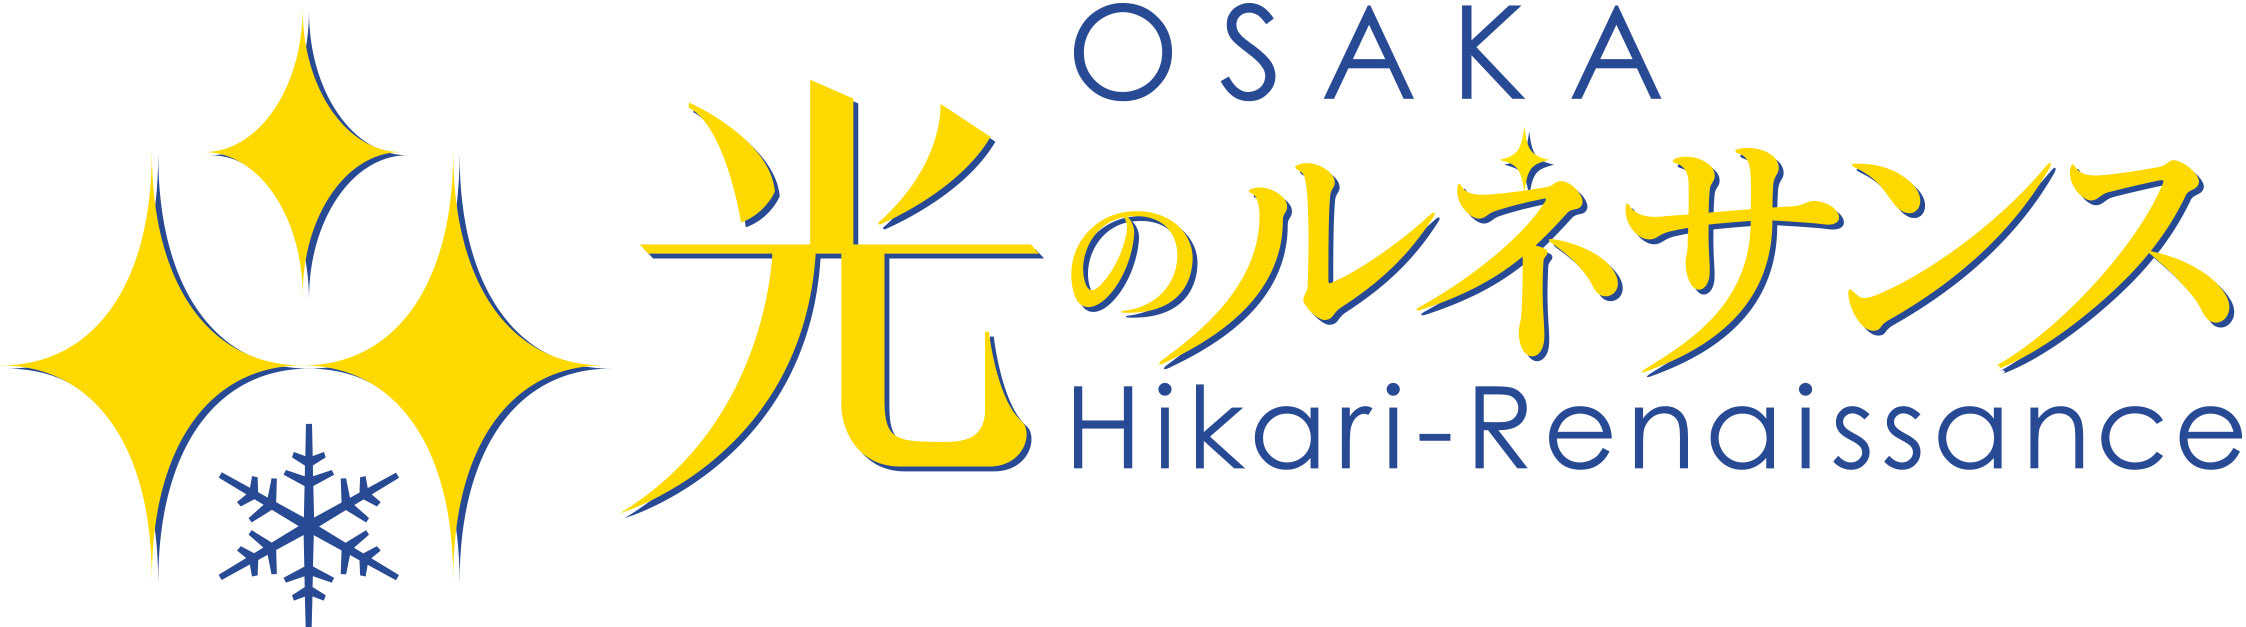 OSAKA光のルネサンス2022 ロゴ03